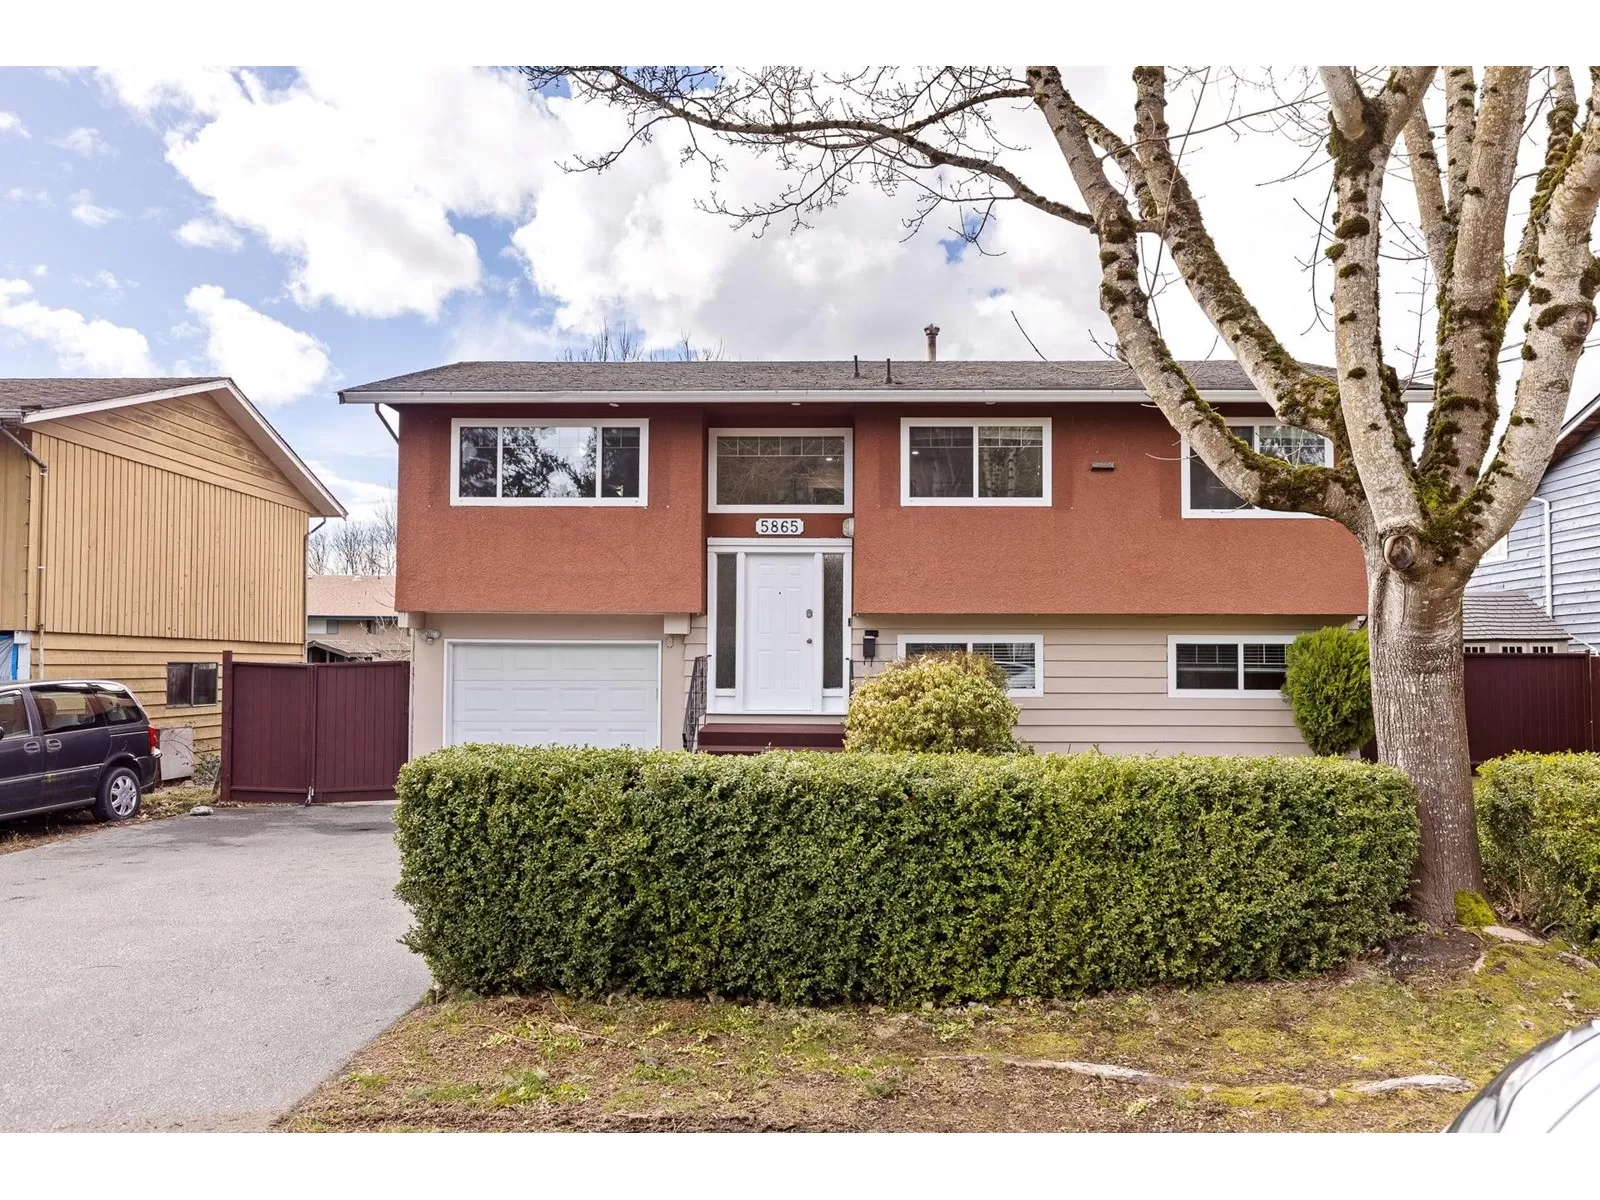 House for rent: 5865 179 Street, Surrey, British Columbia V3S 4K1